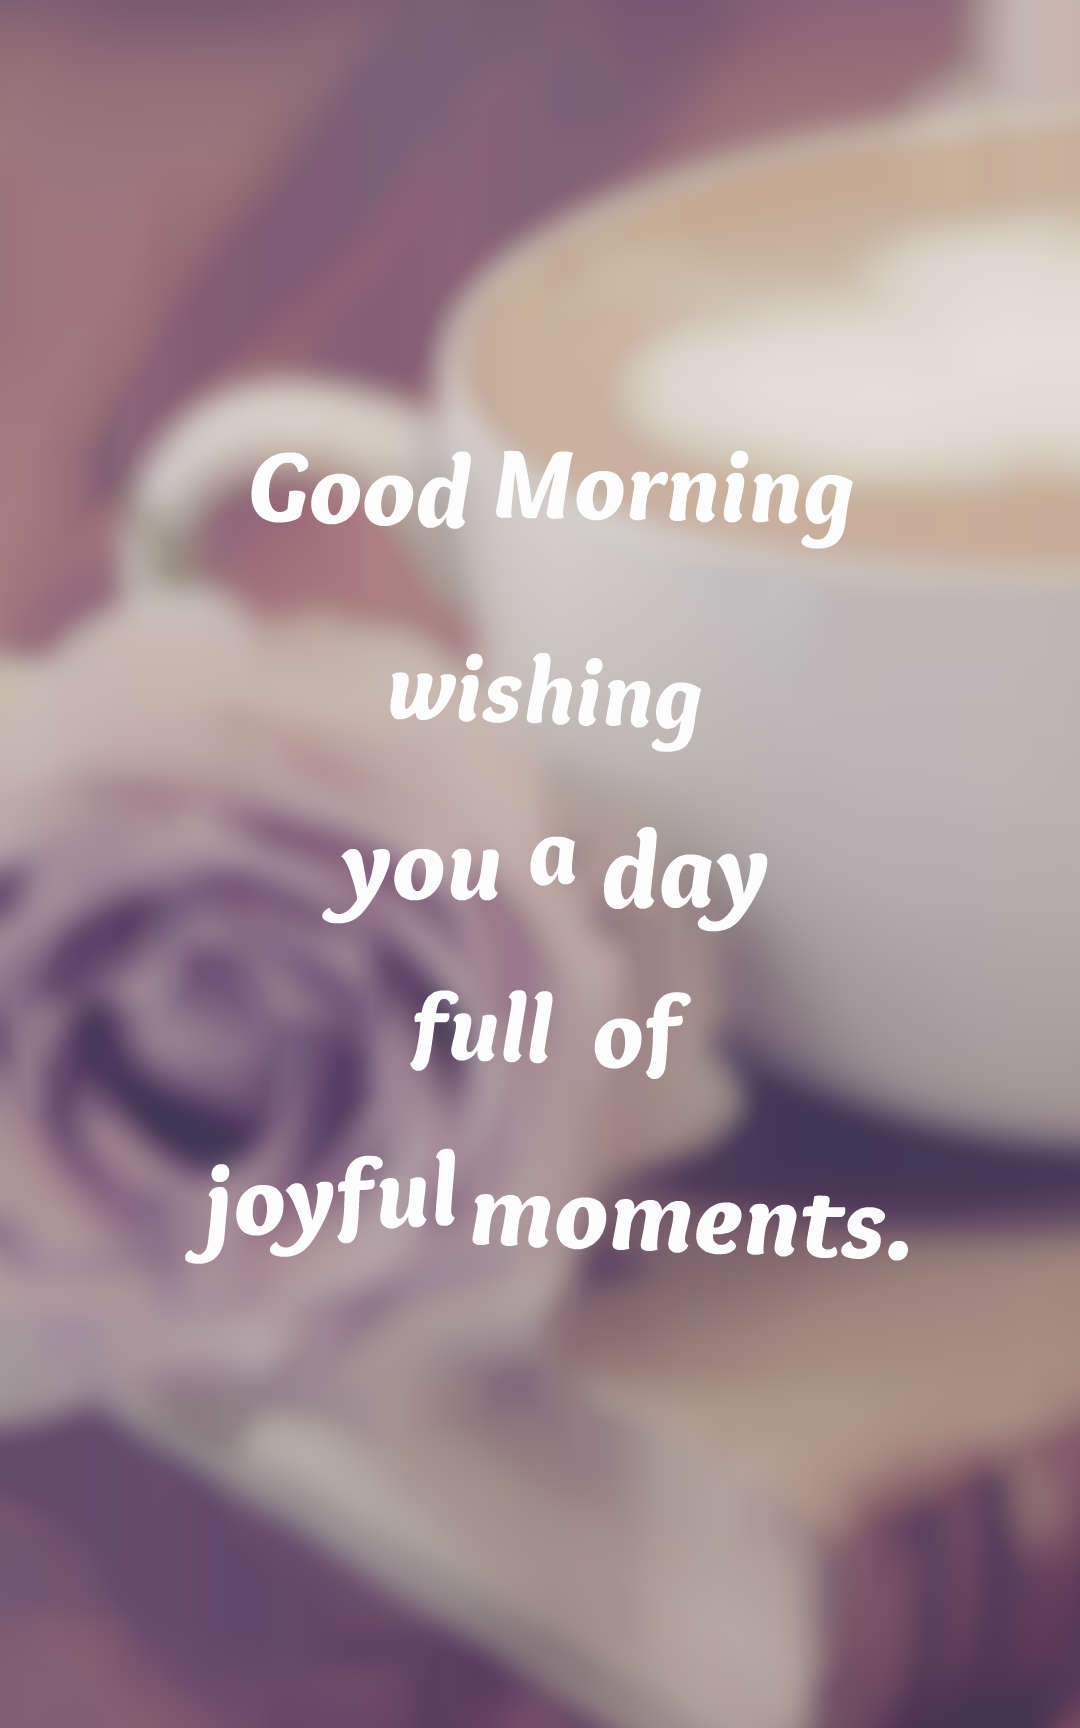 Good Morning wishing you a day full of joyful moments